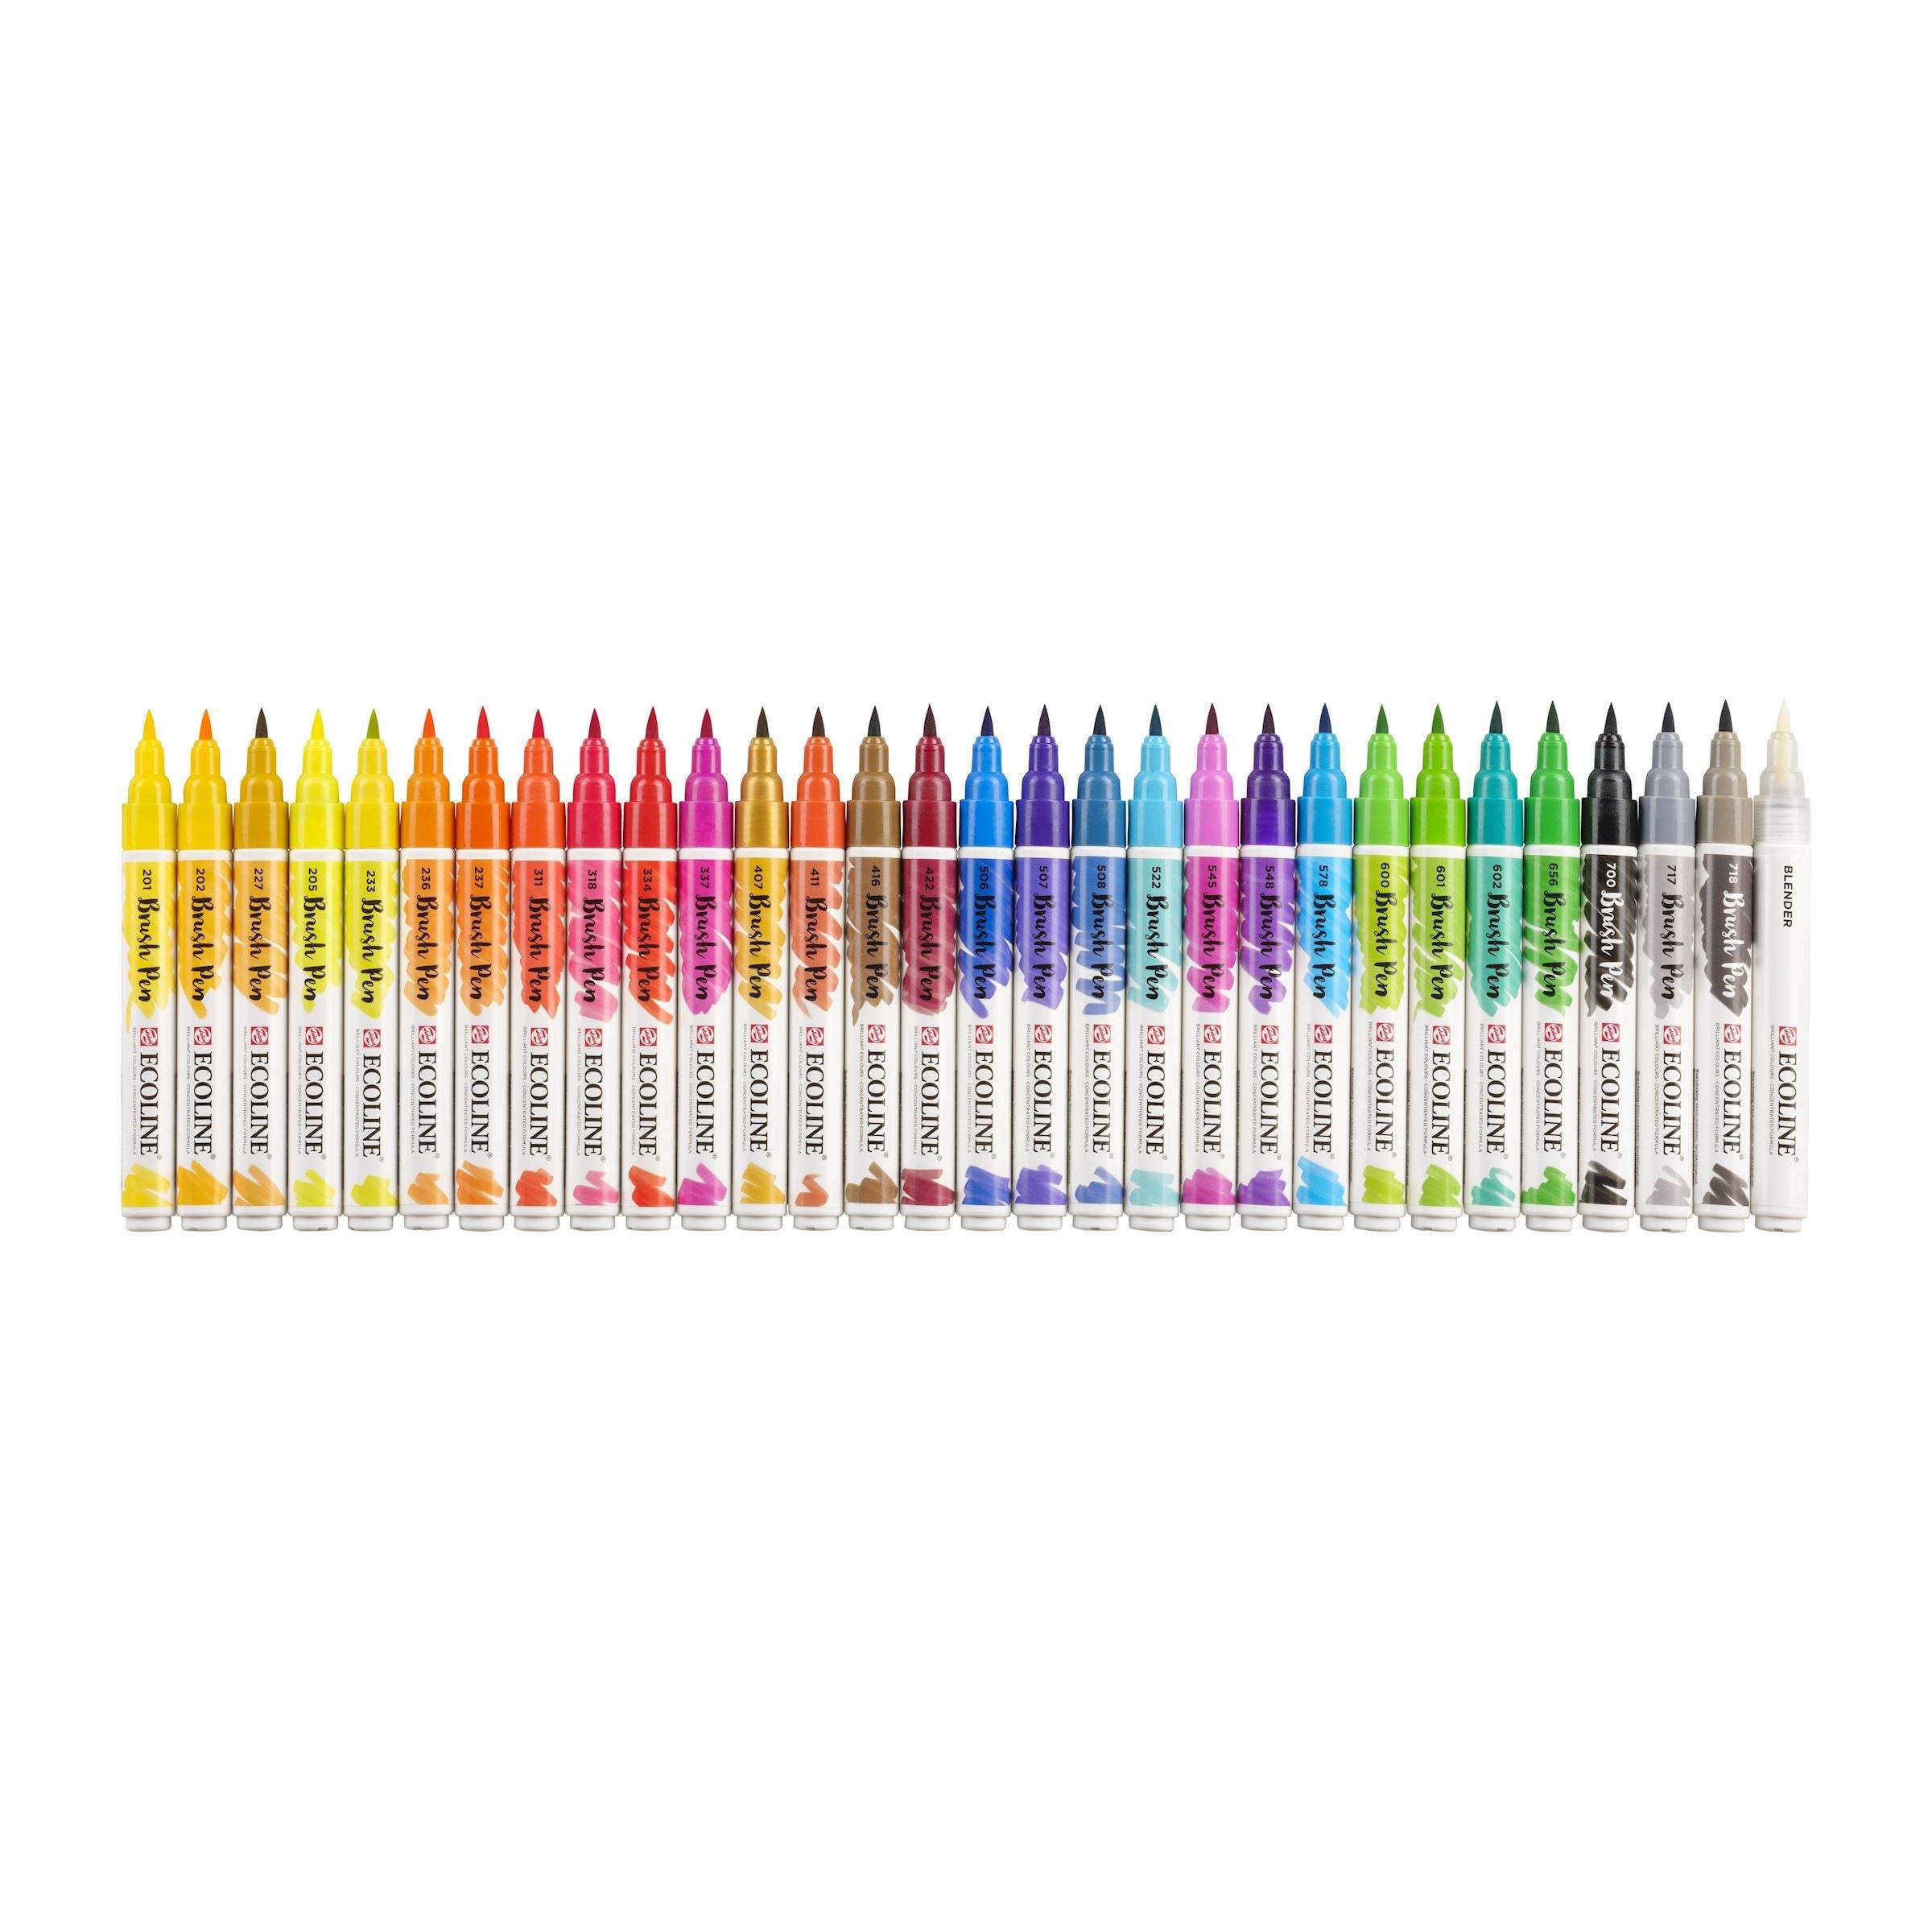 Ecocline Brush Pens set of 30